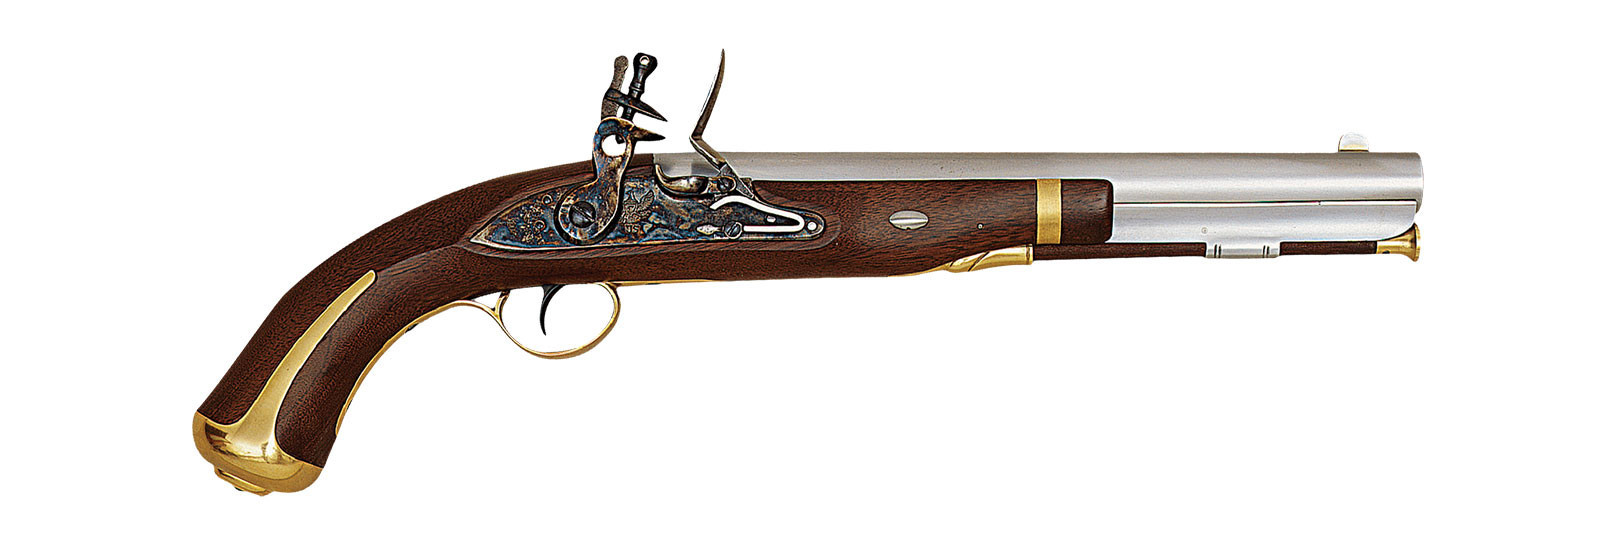 Harper's Ferry Pistol